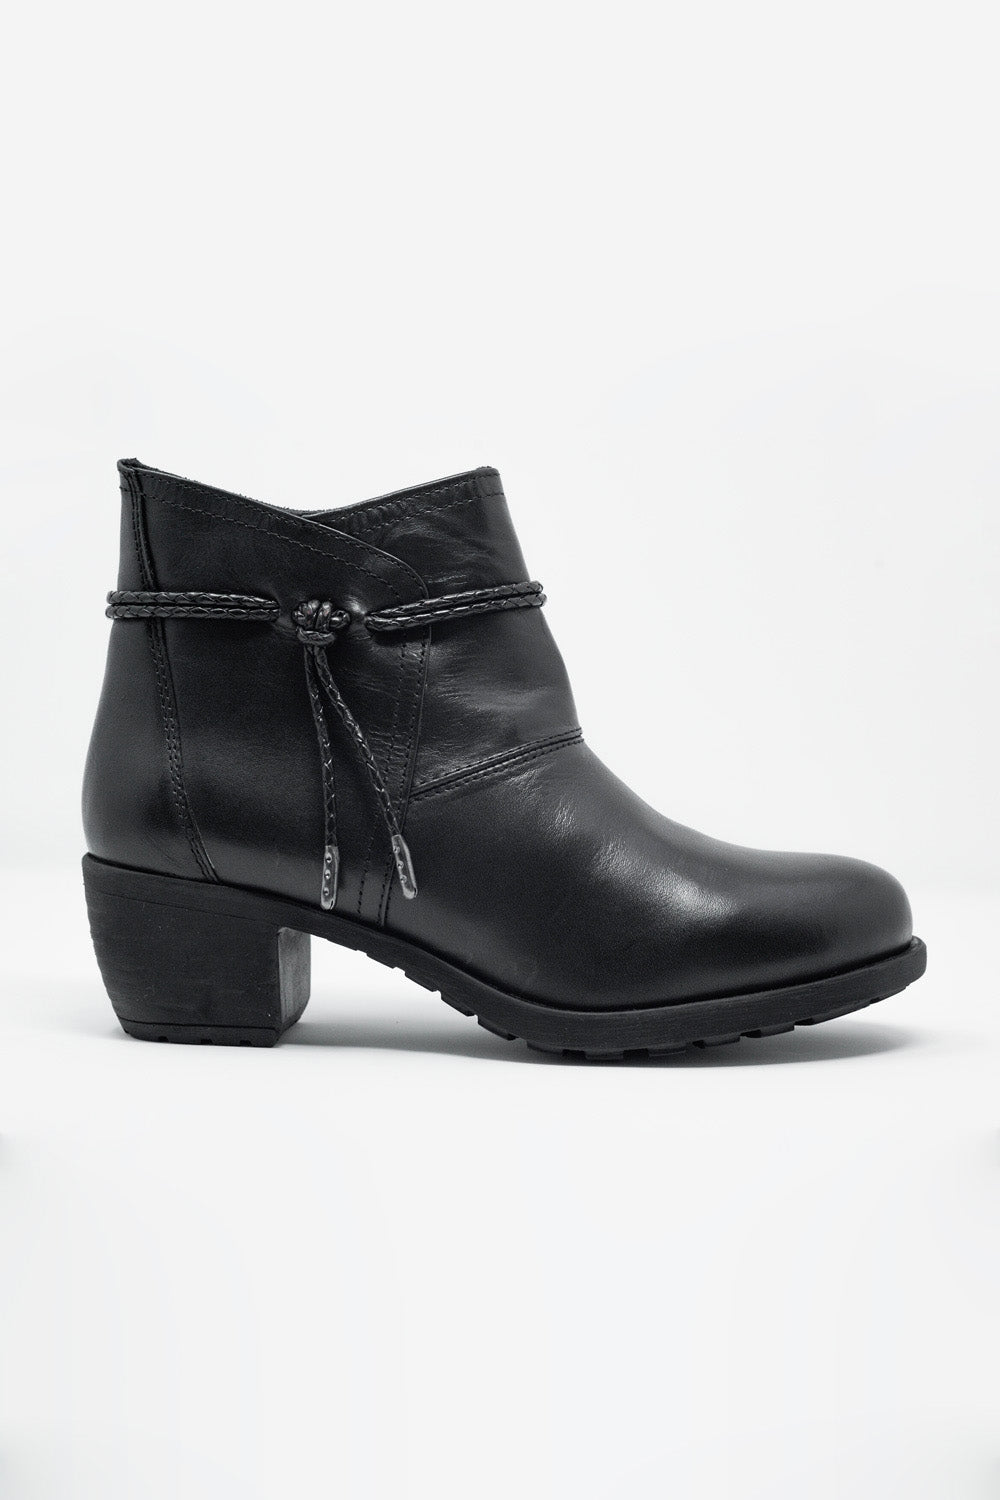 Q2 Black blocked mid heeled ankle boots